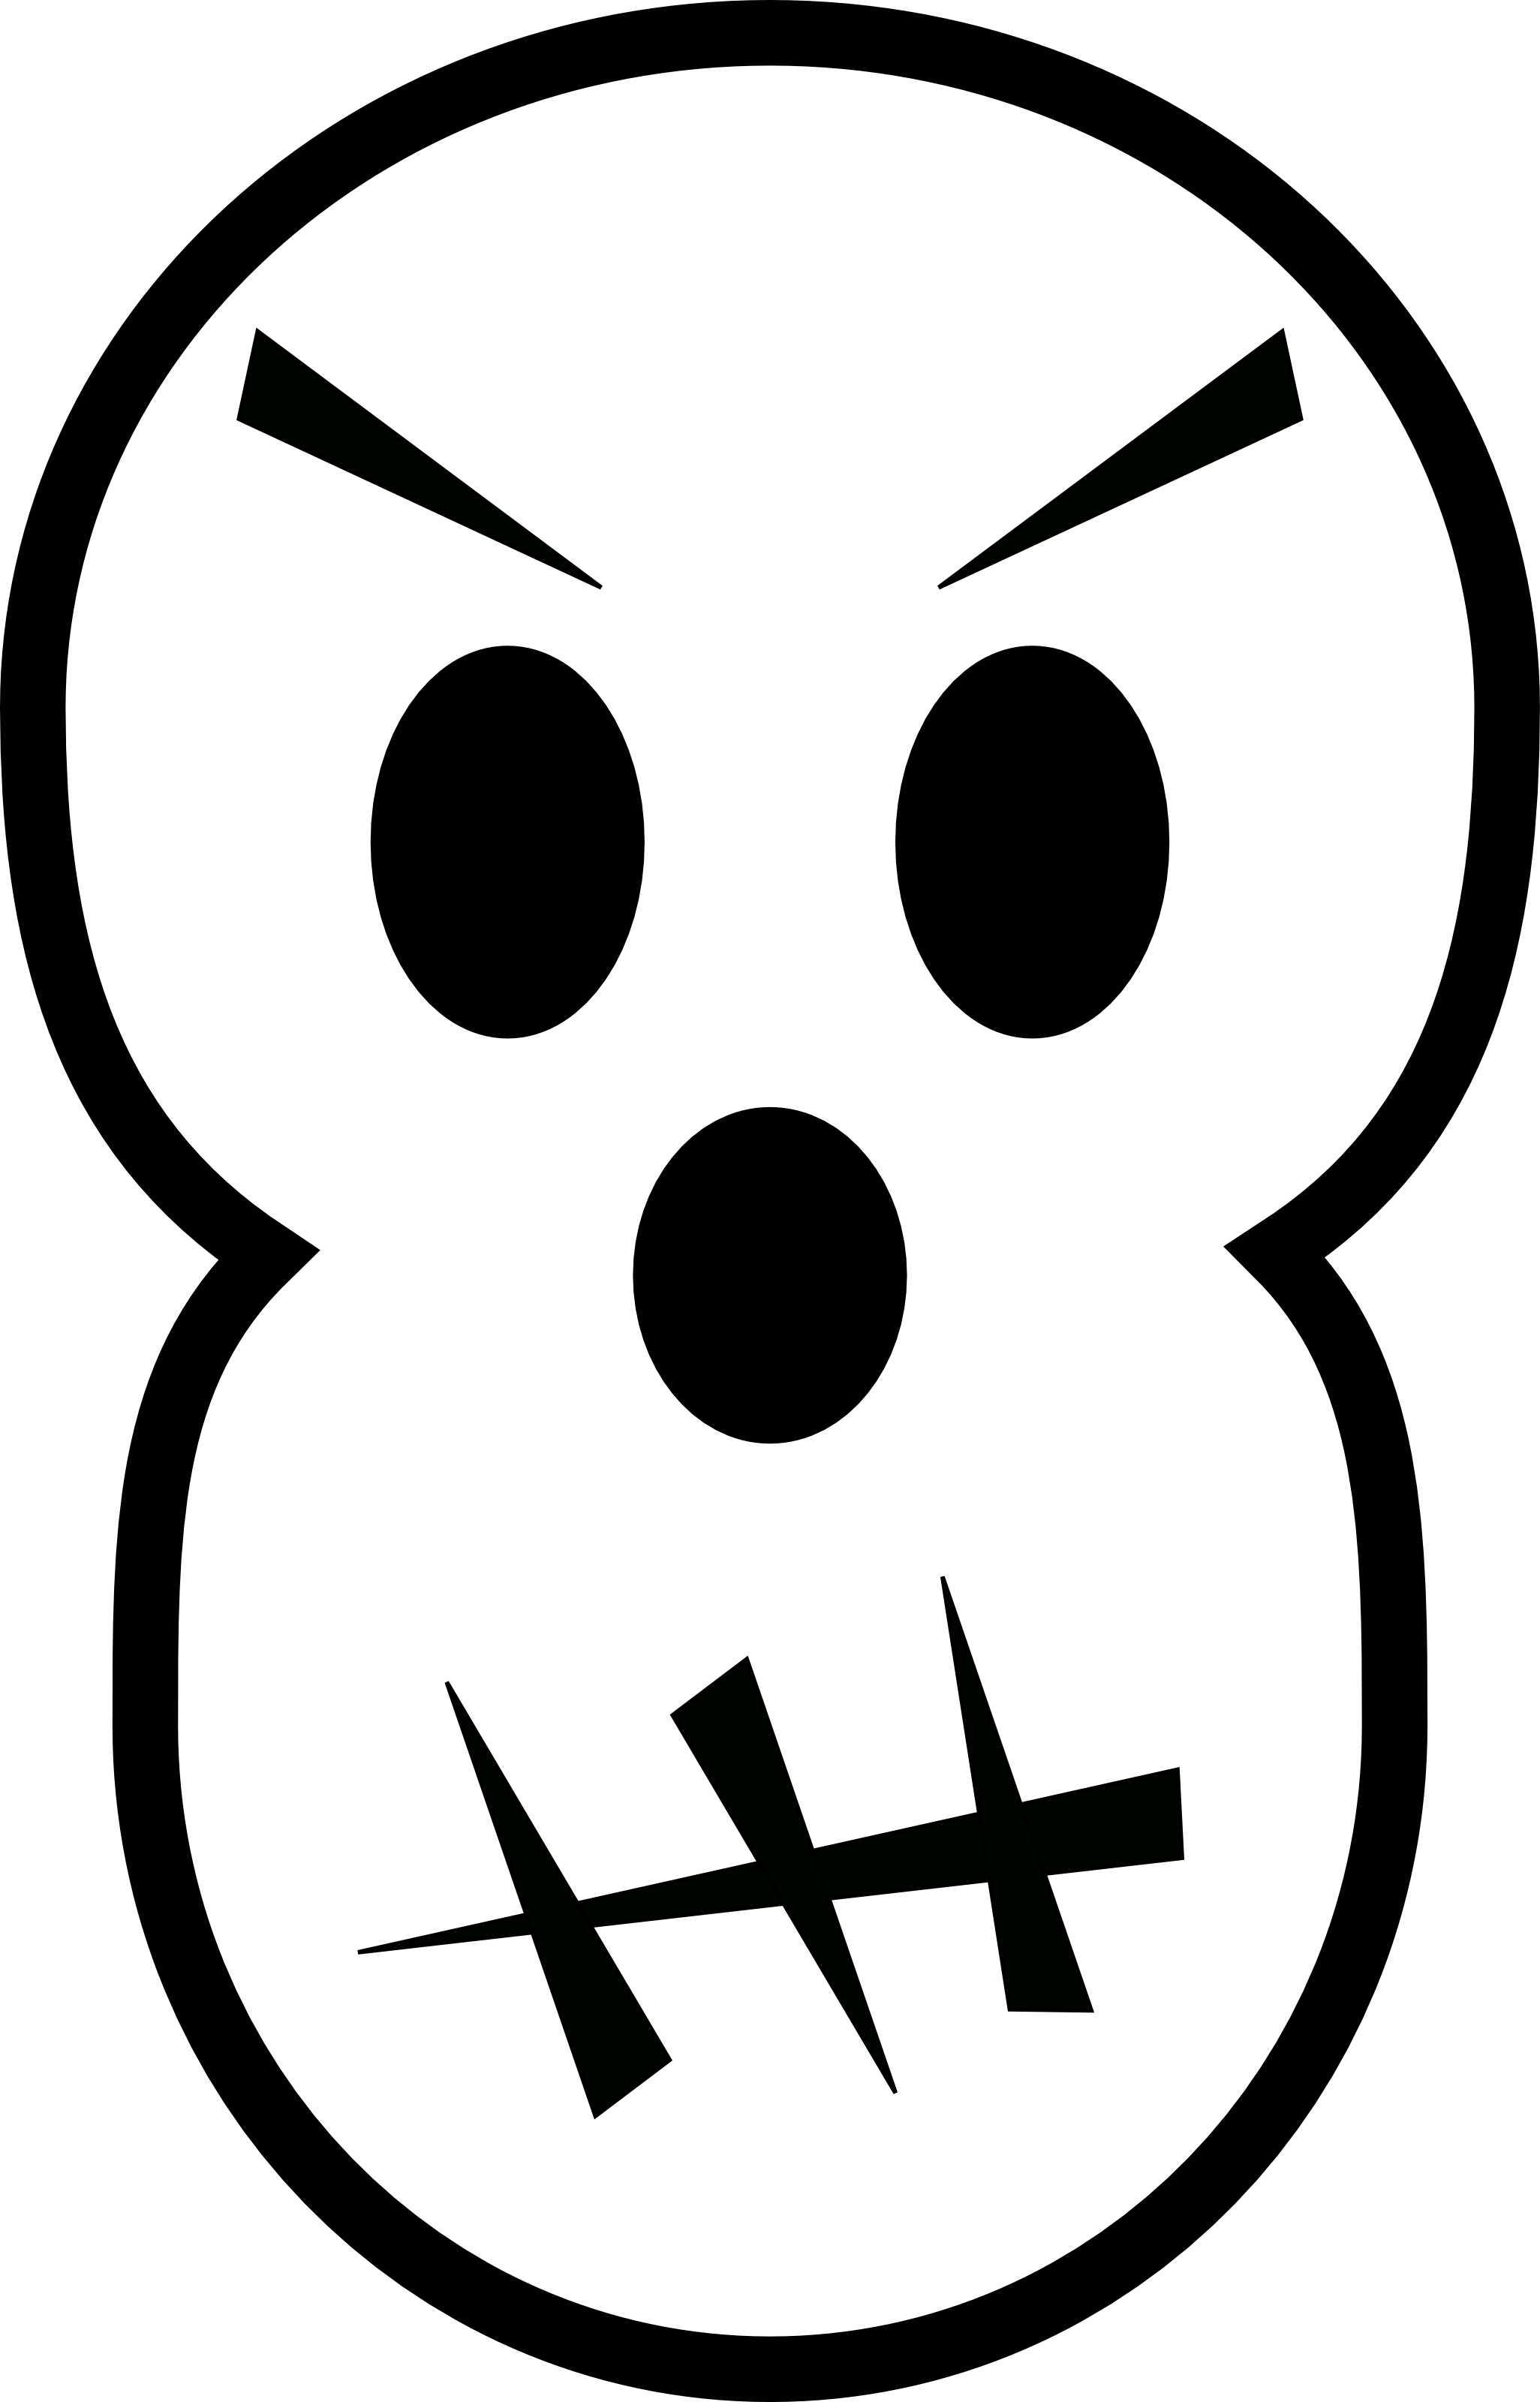 Happy Dog Face Clip Art | Clipart Panda - Free Clipart Images